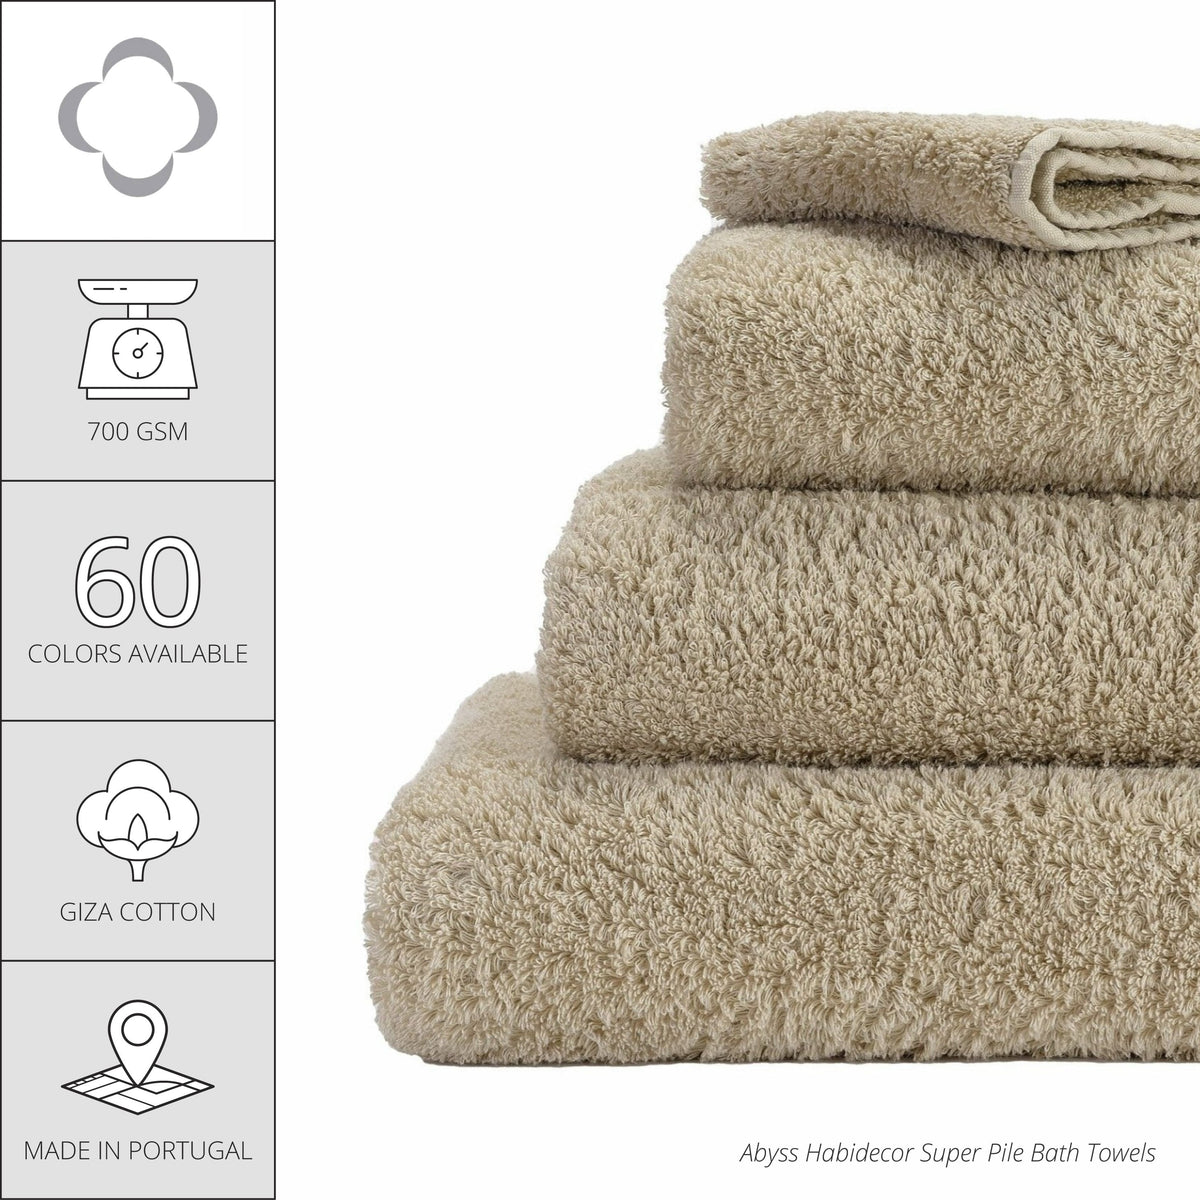 Abyss Habidecor Super Pile Bath Towels Infographic